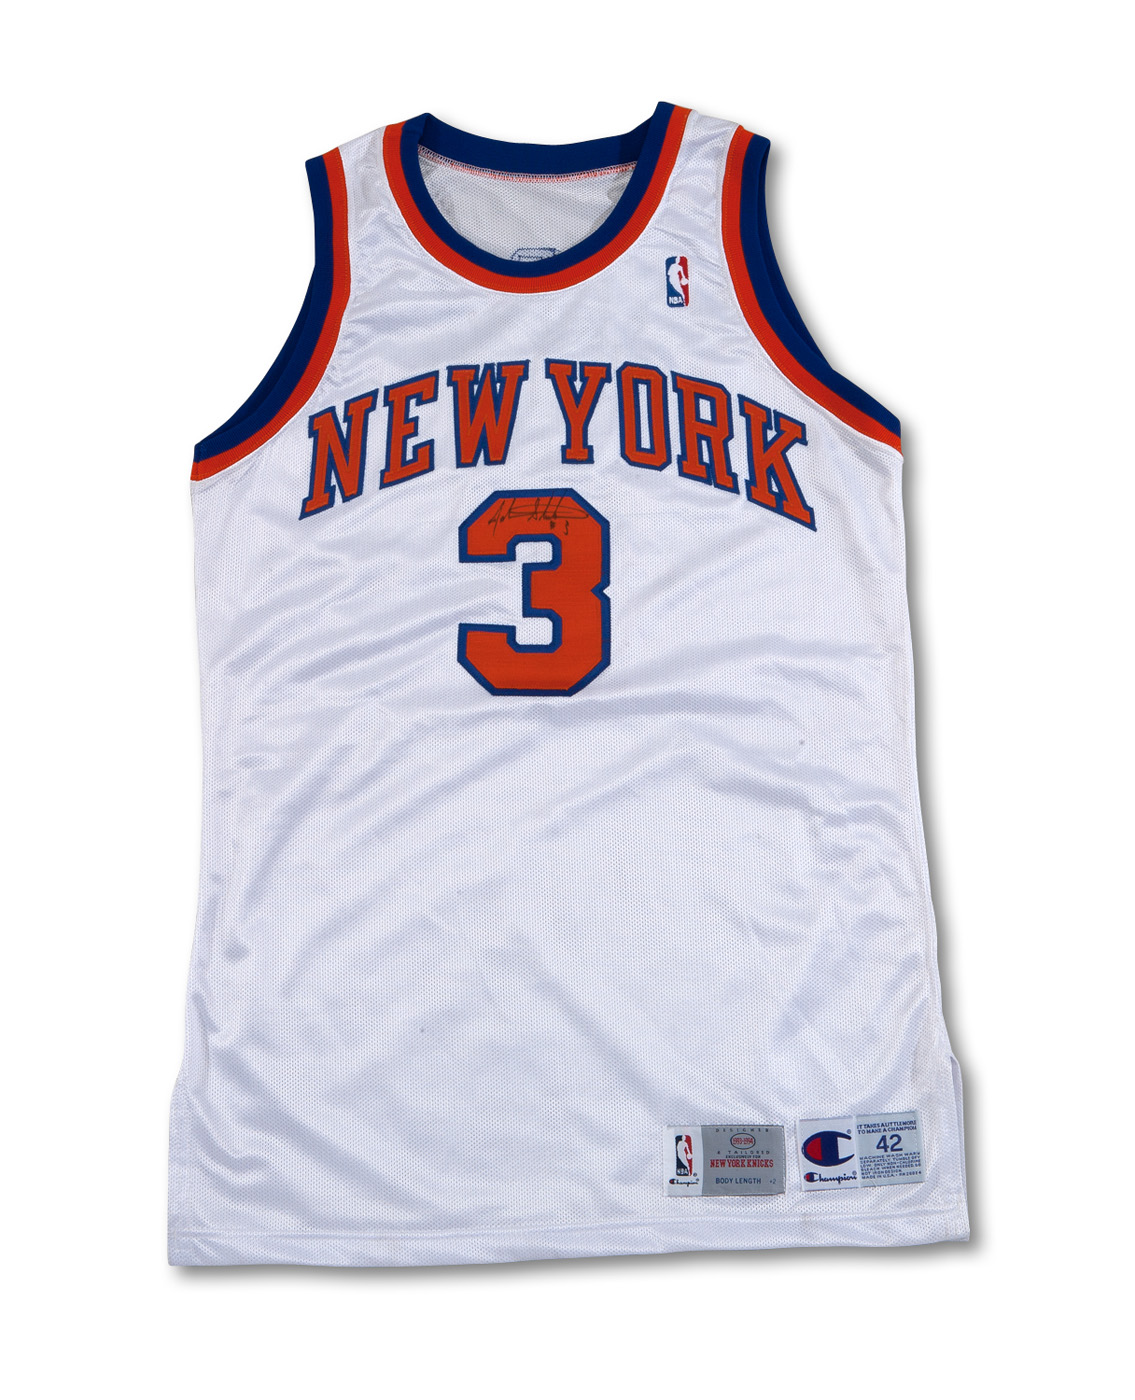 1997-98 John Starks Game Worn, Signed New York Knicks Jersey